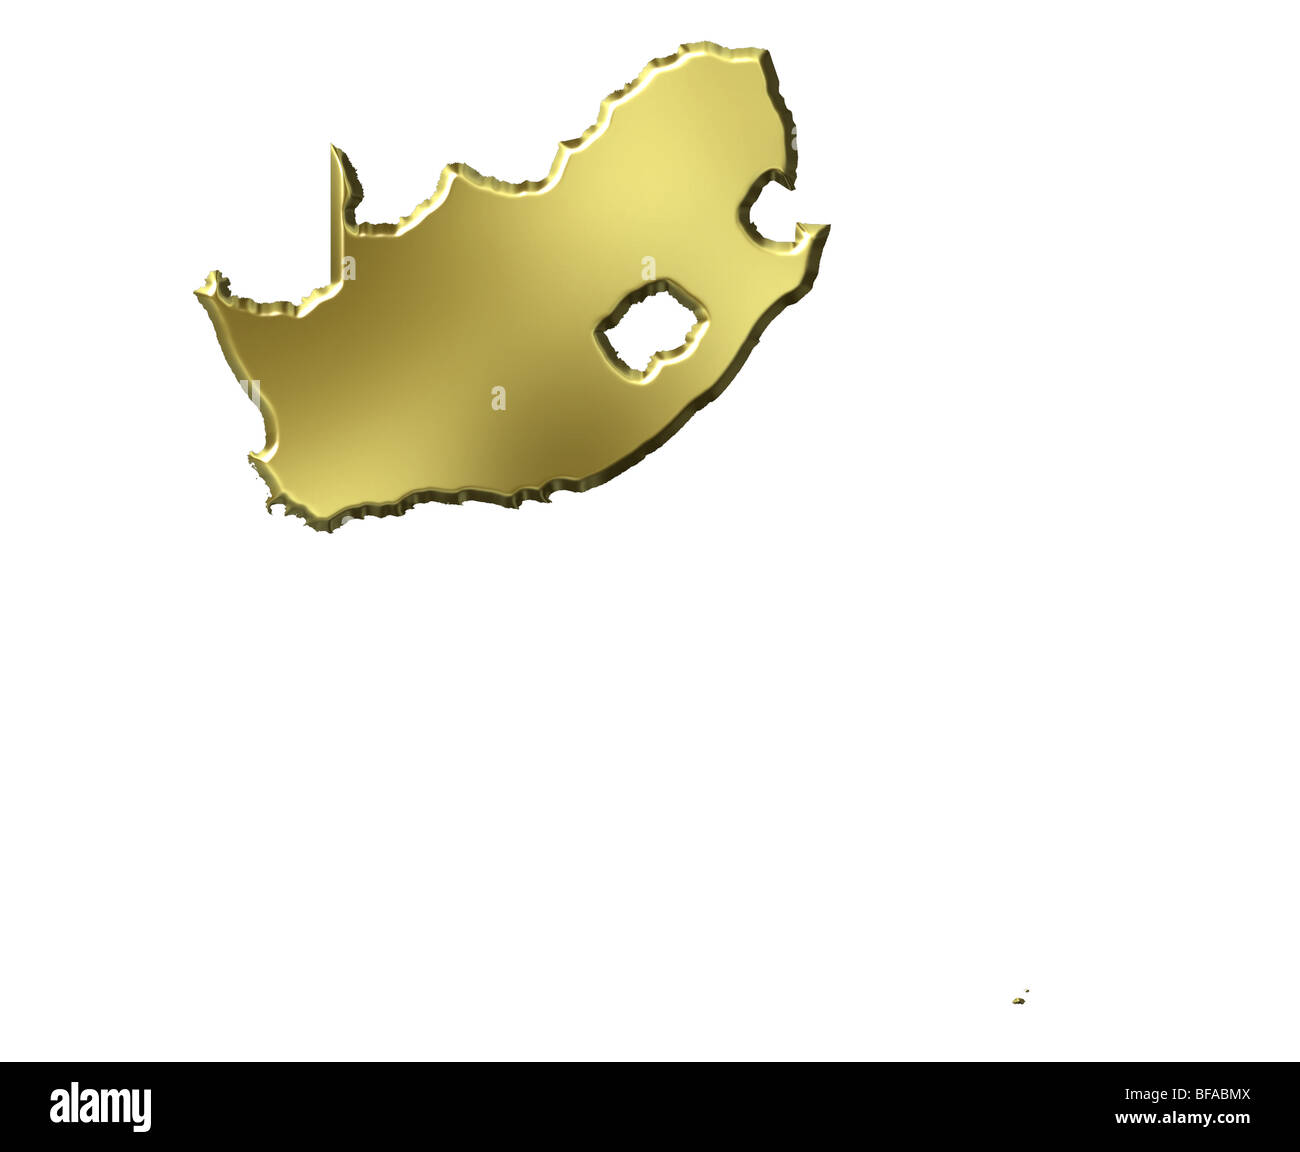 South Africa 3d golden map Stock Photo